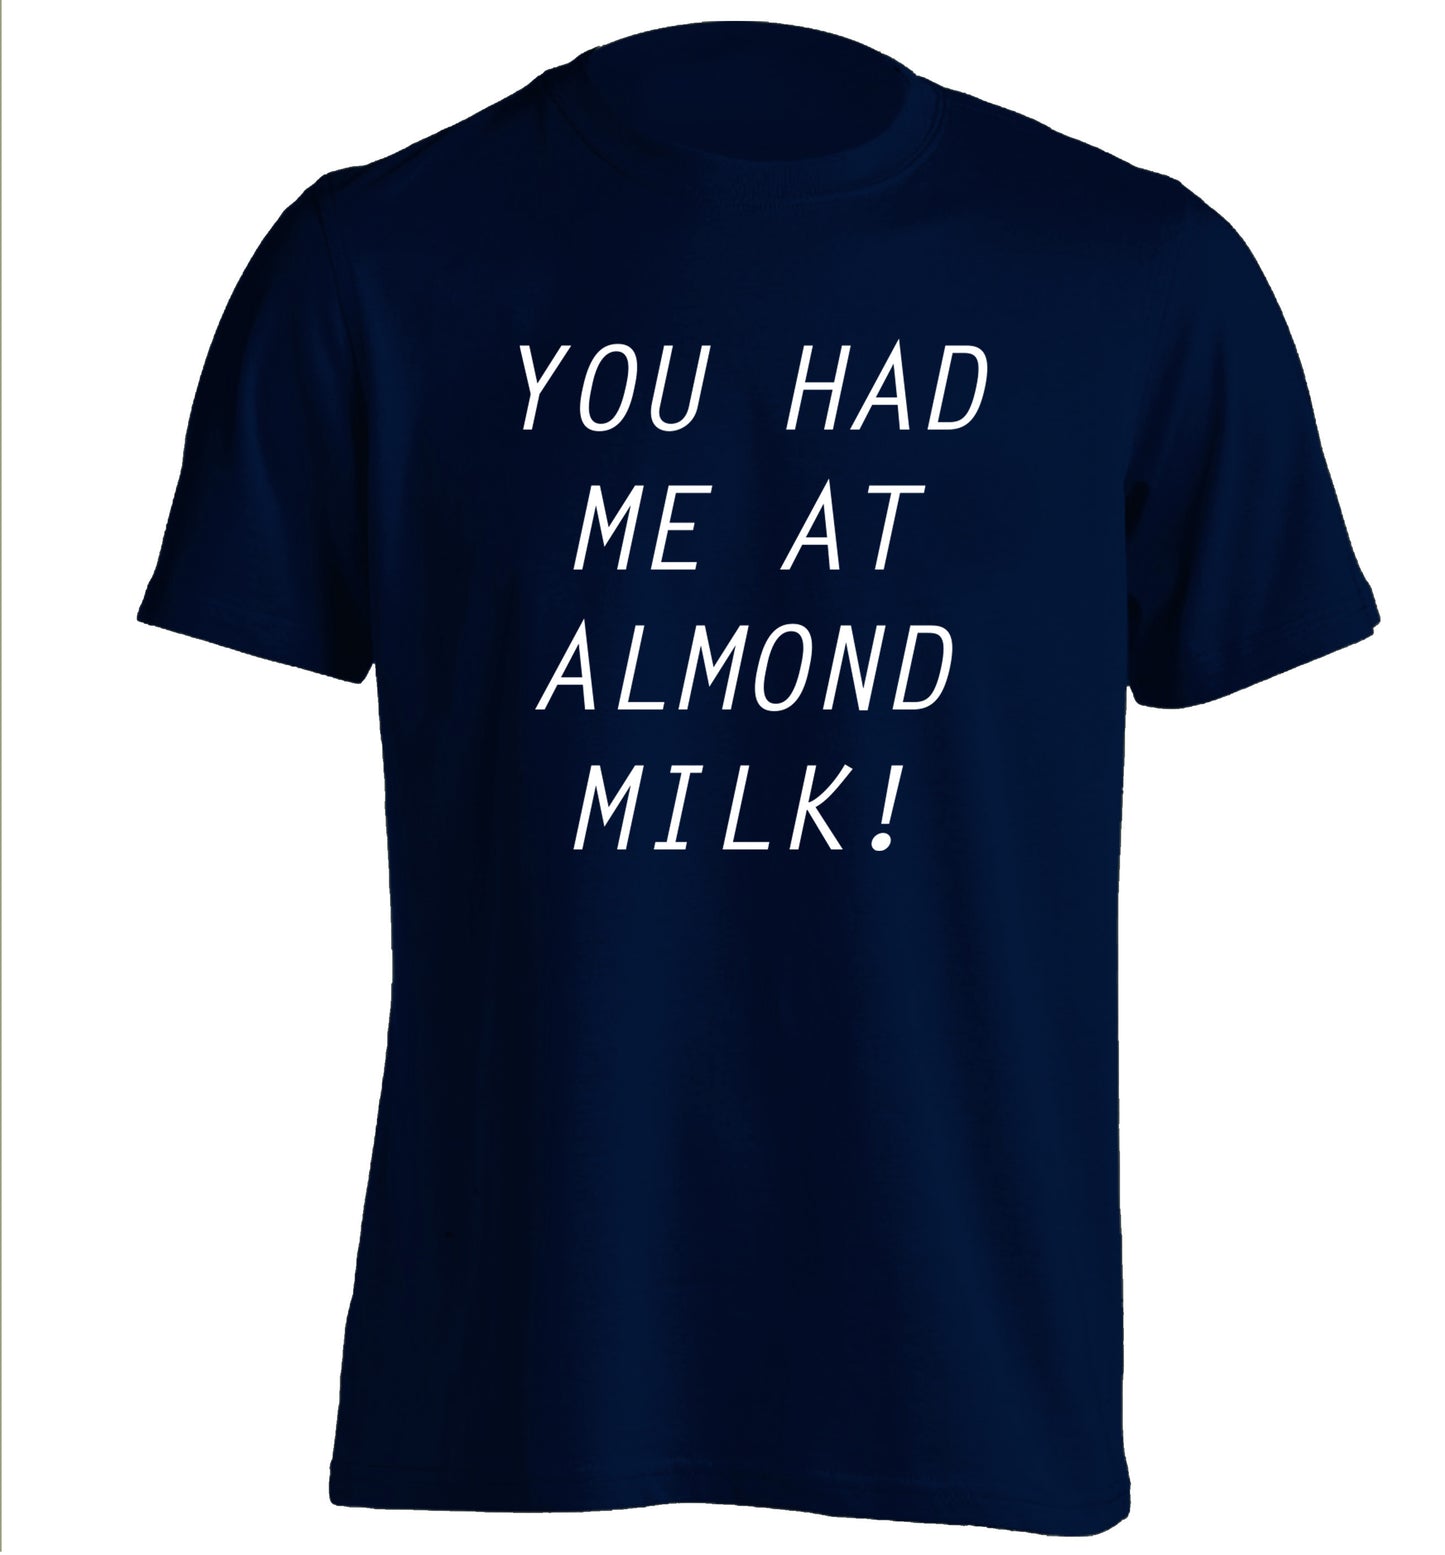 You had me at almond milk adults unisex navy Tshirt 2XL